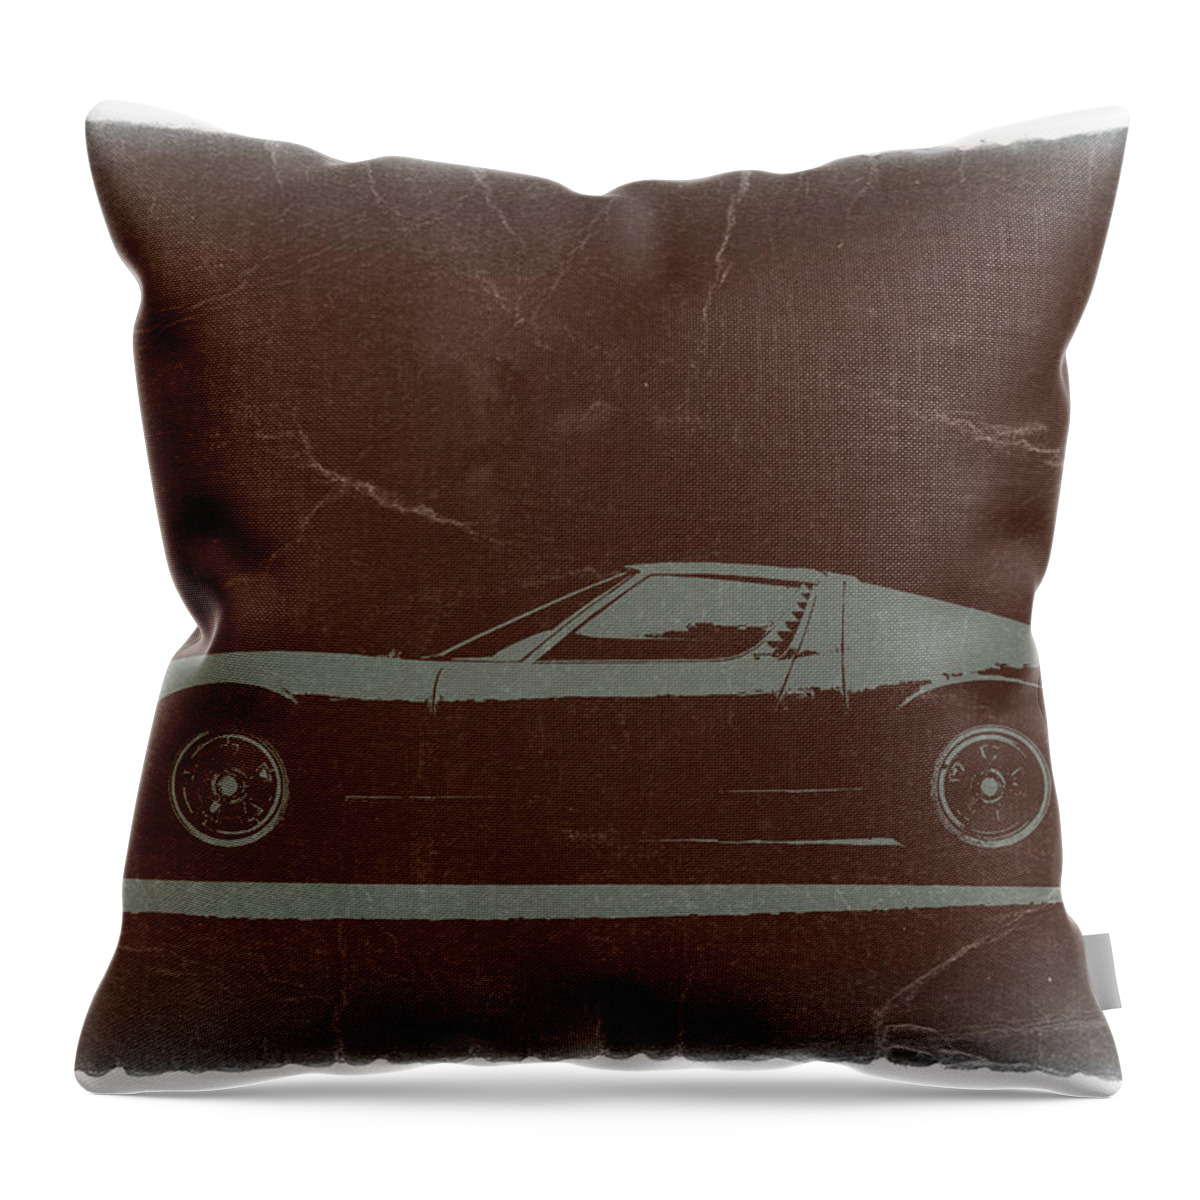 Lamborghini Miura Throw Pillow featuring the photograph Lamborghini Miura by Naxart Studio